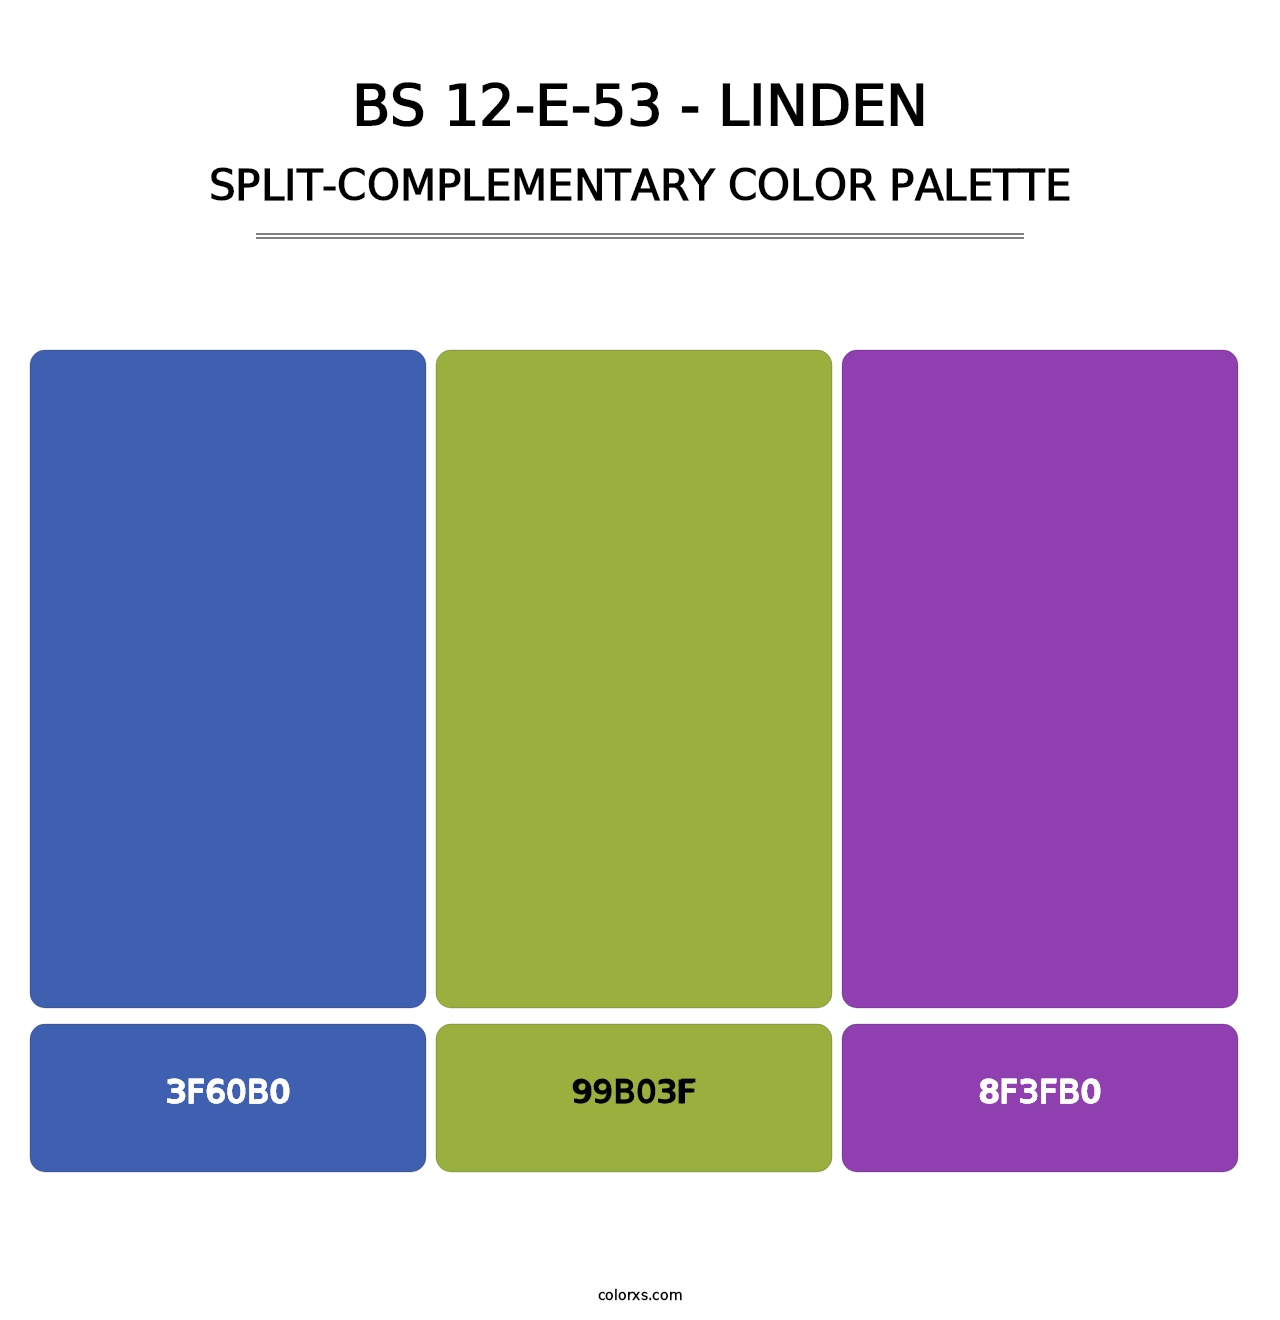 BS 12-E-53 - Linden - Split-Complementary Color Palette